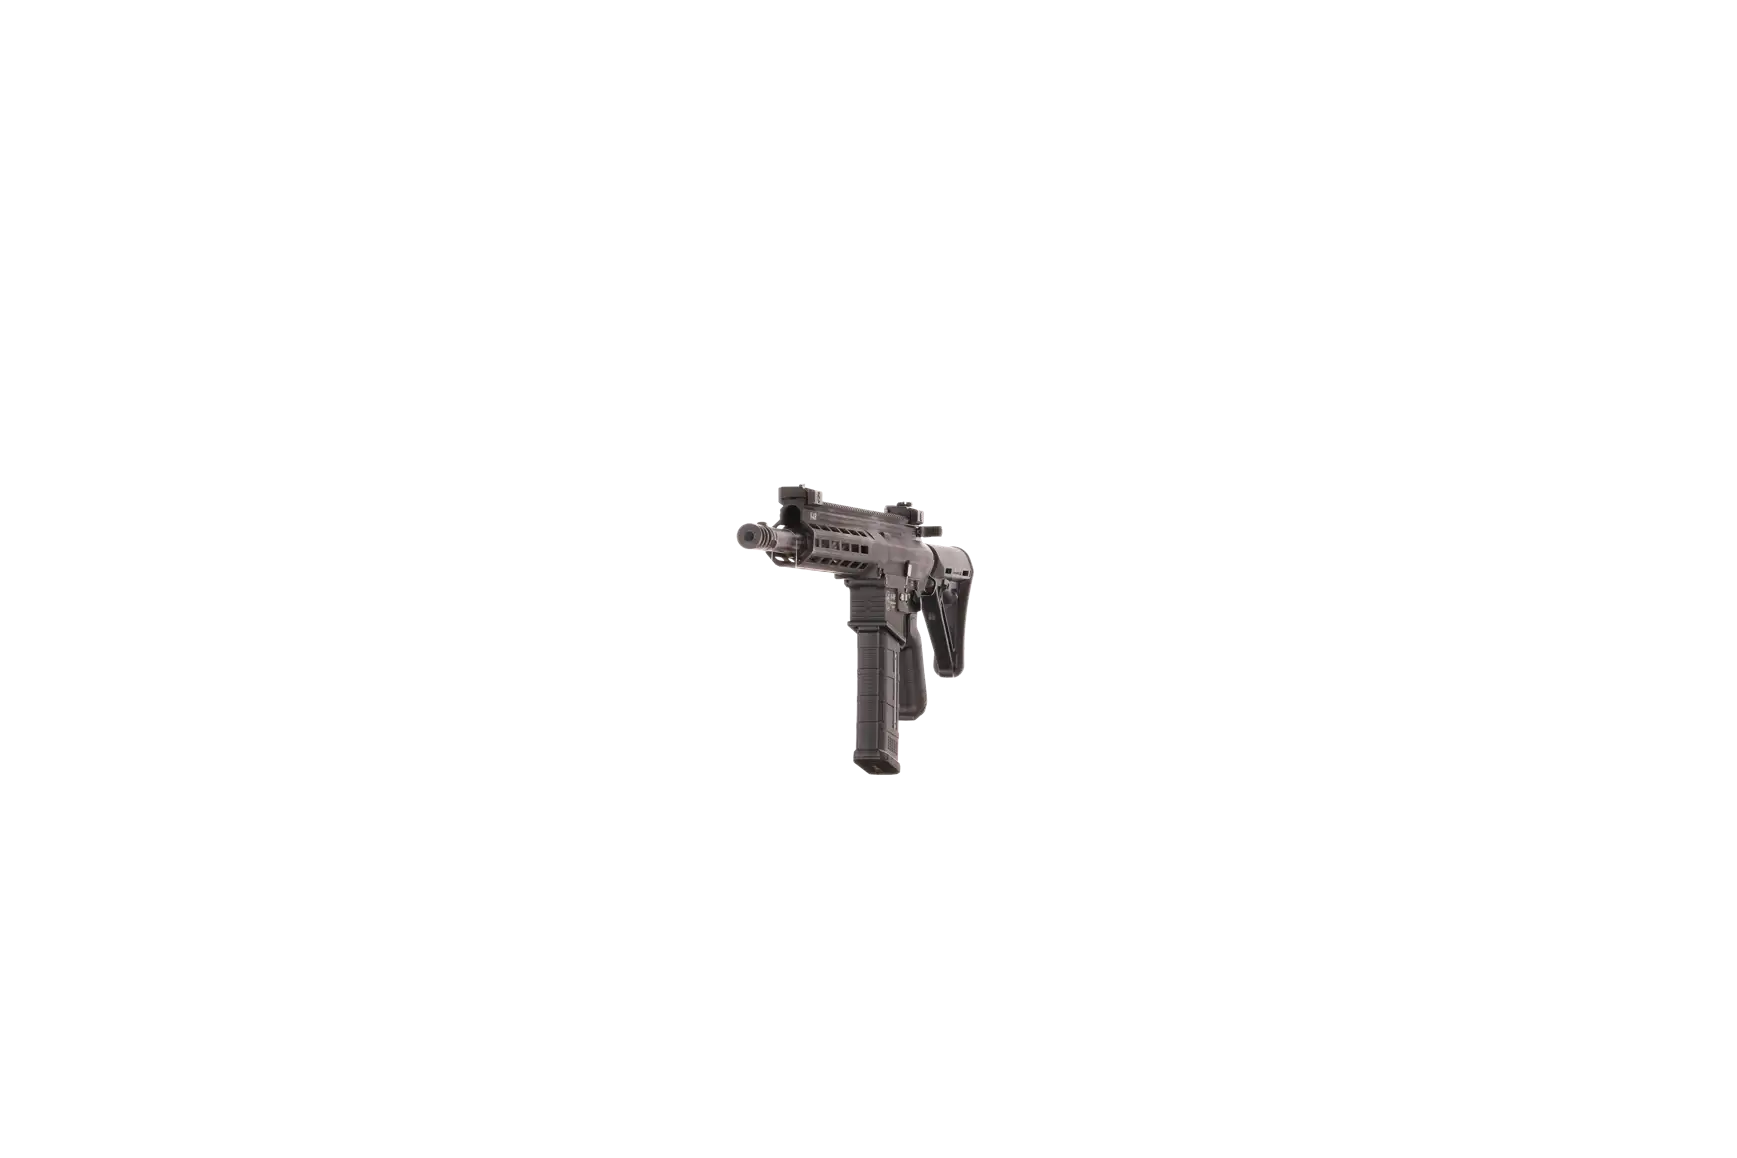 Náhledový obrázek pušky V-AR 762 x 45mm SPINVIEW 1 R21